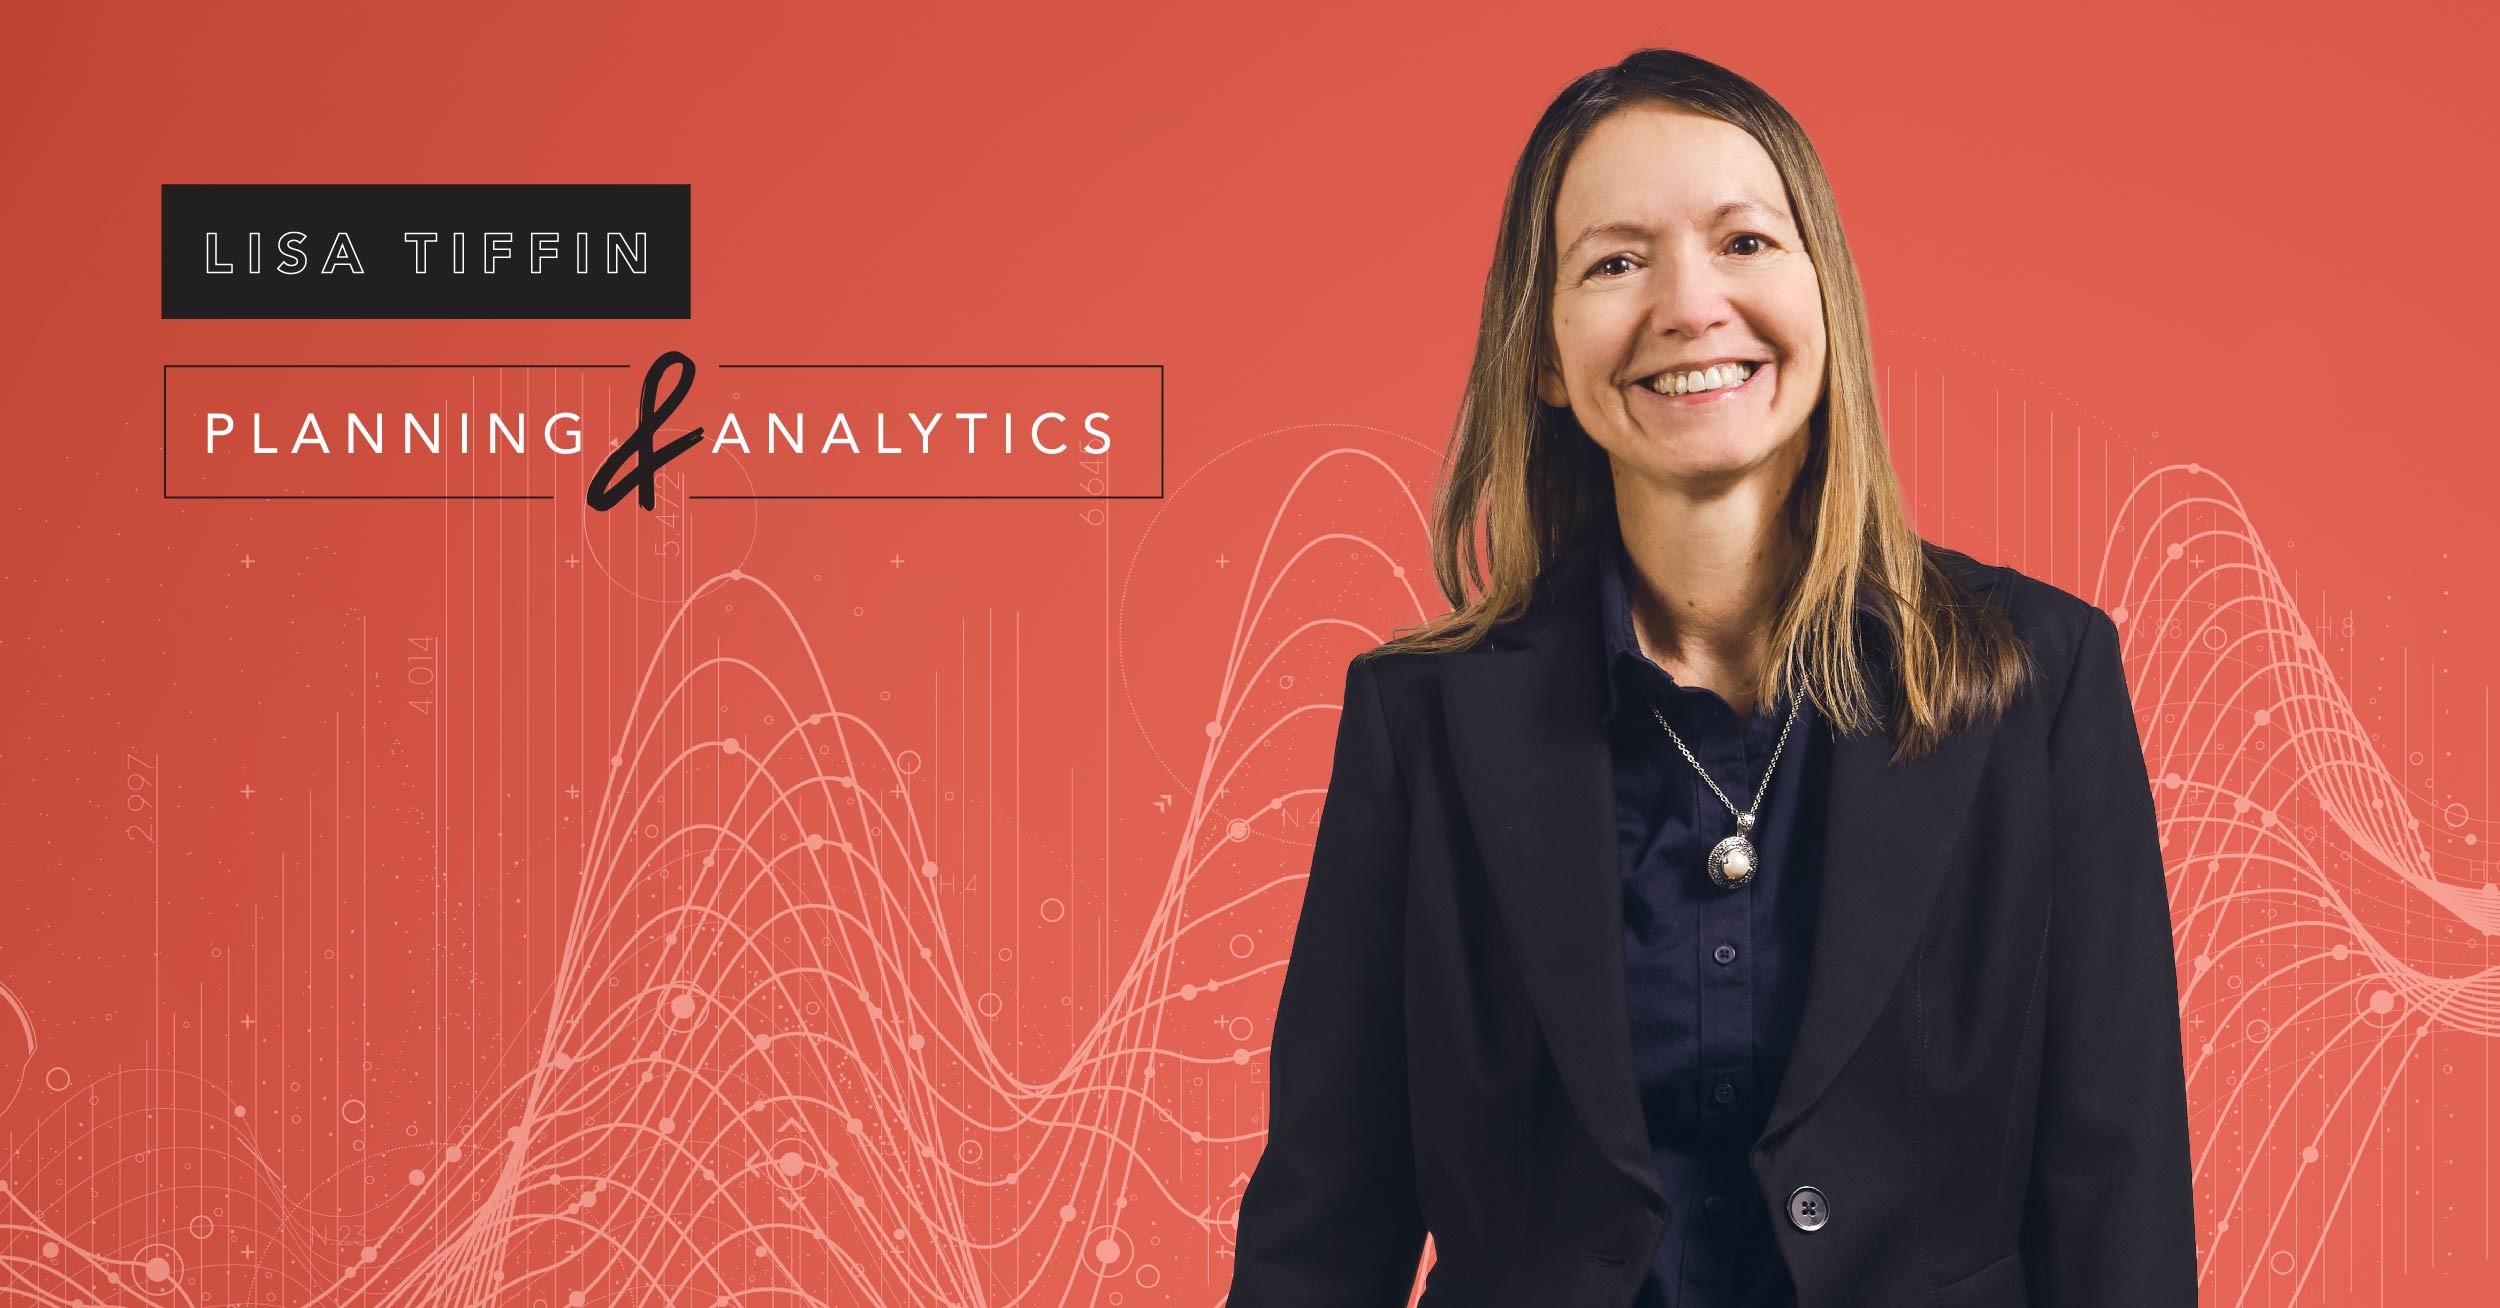 Lisa Tiffin: Planning & Analytics